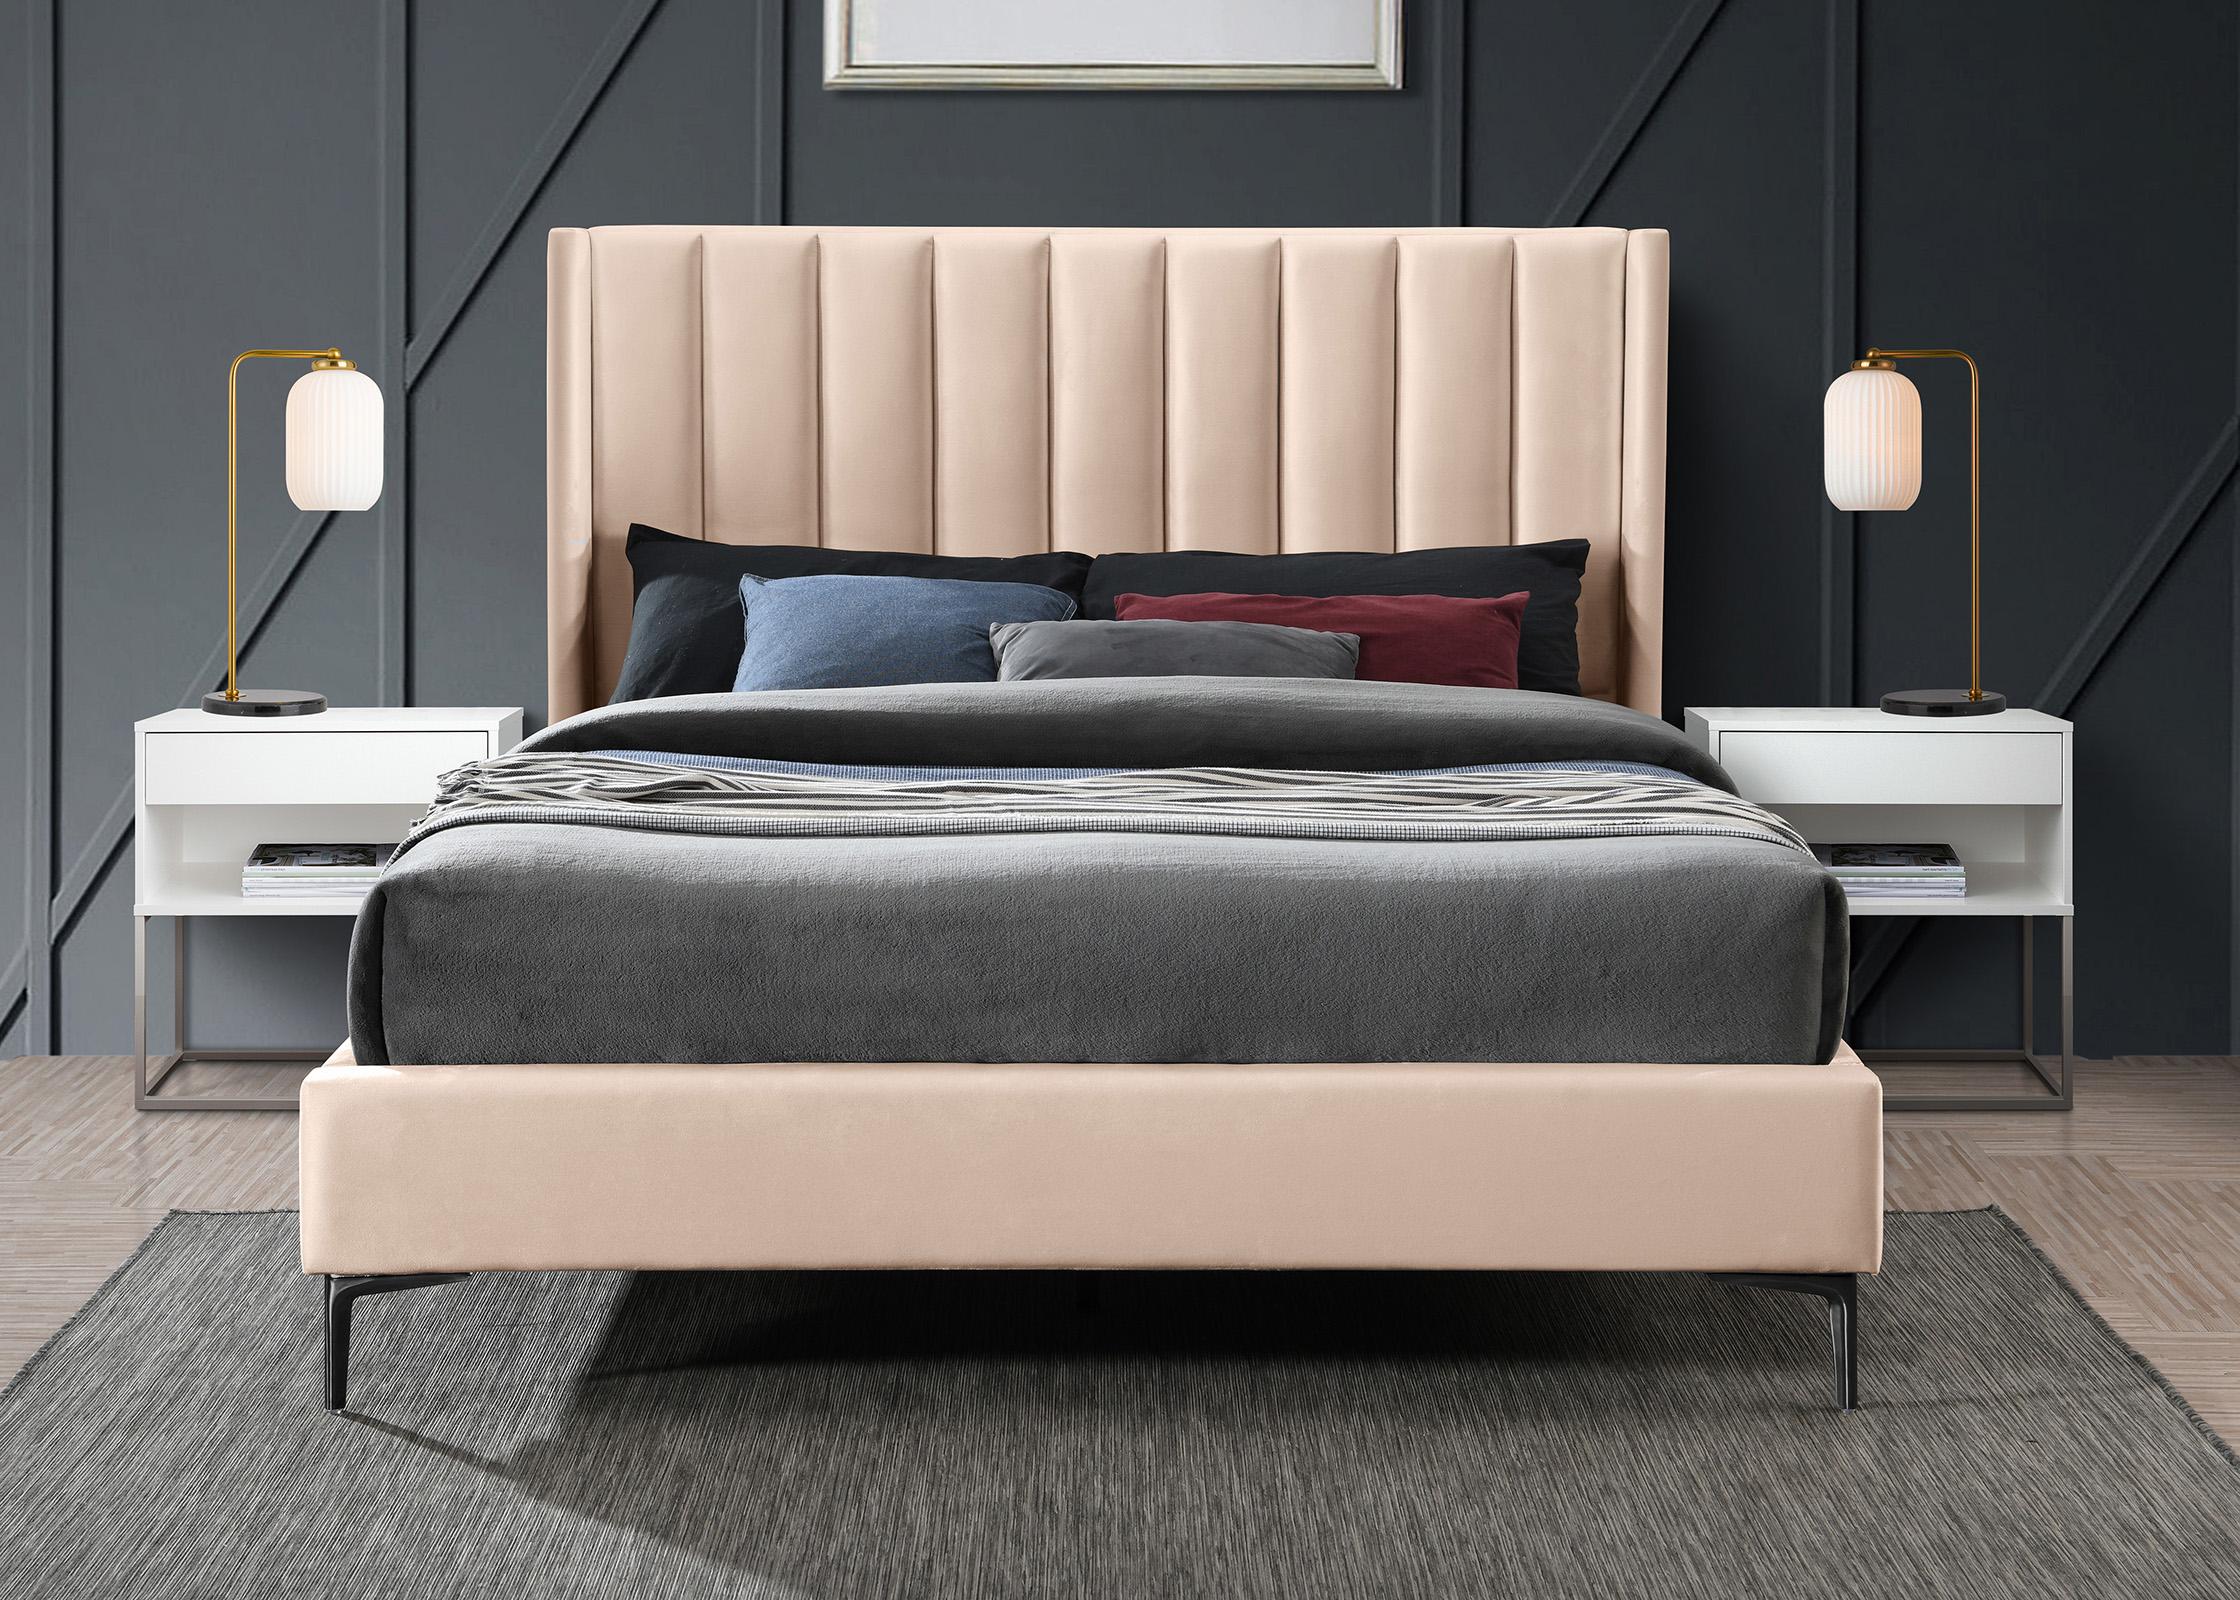 

    
Meridian Furniture NadiaPink-K Platform Bed Pink NadiaPink-K
